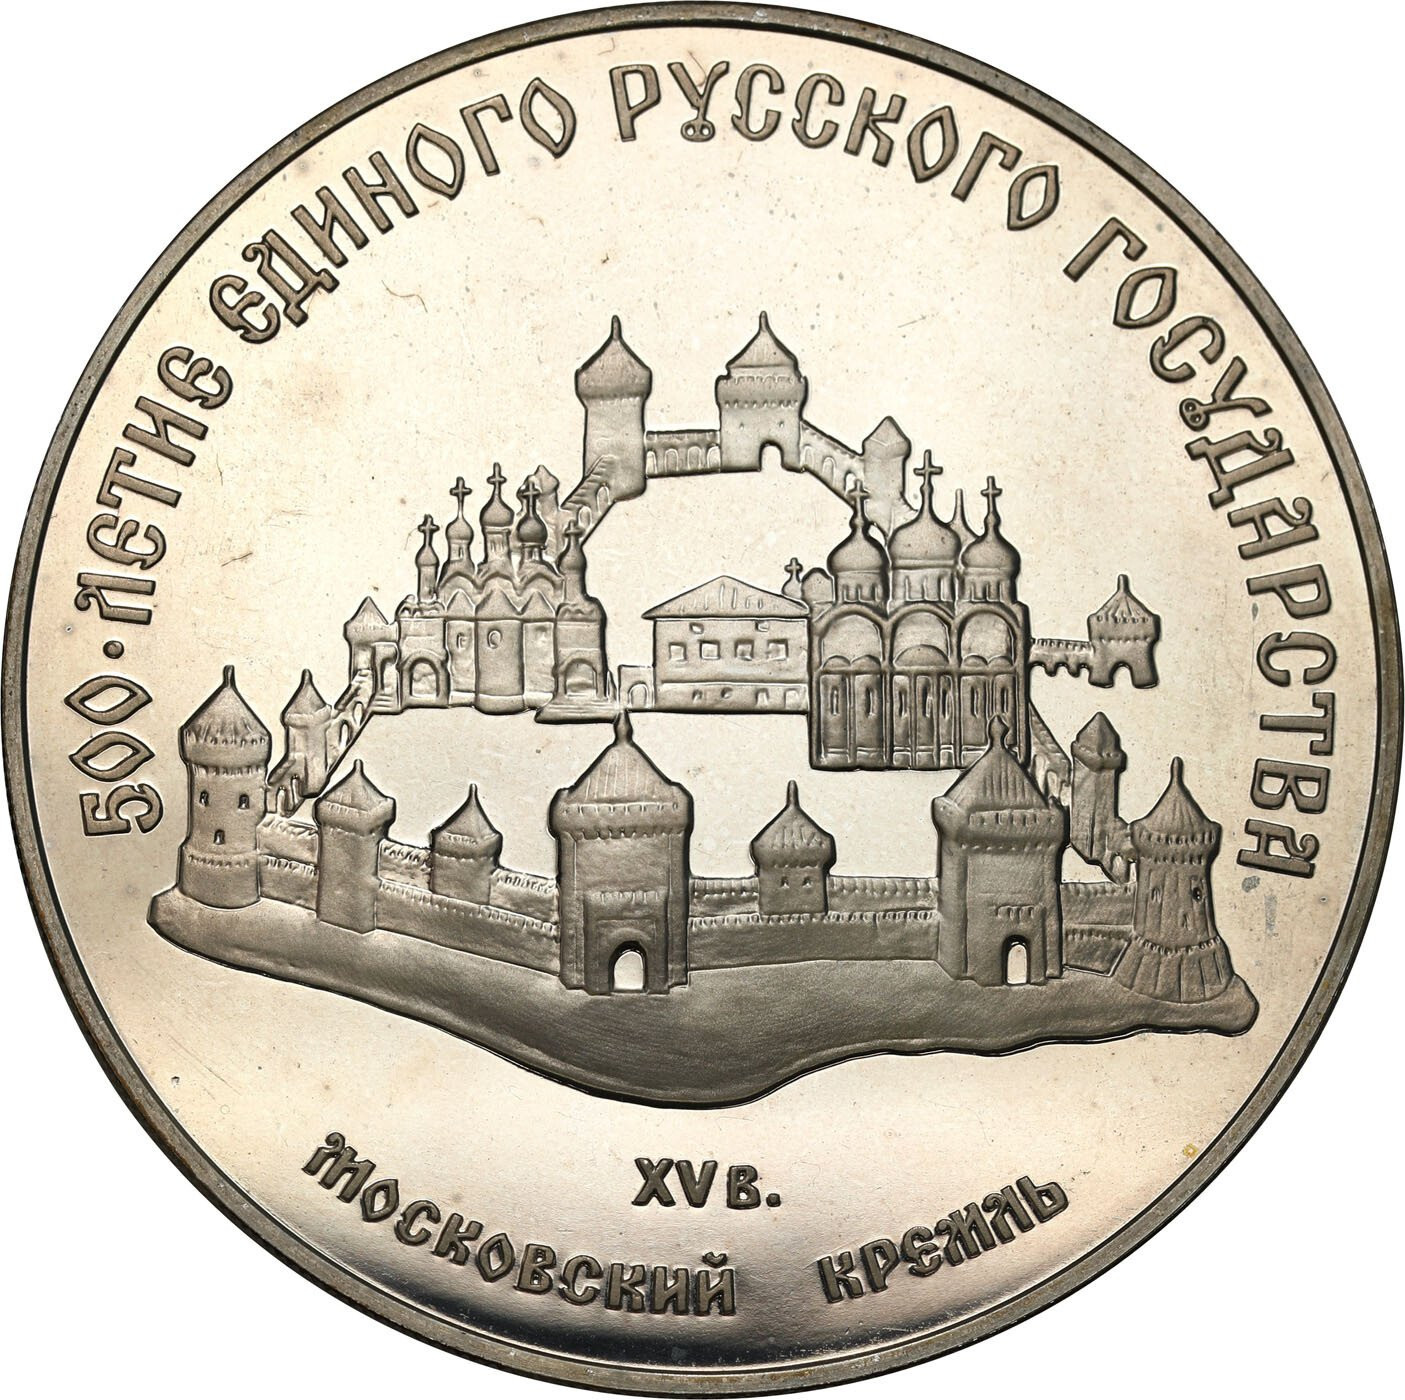 Rosja, ZSRR. 3 ruble 1989, Moskwa